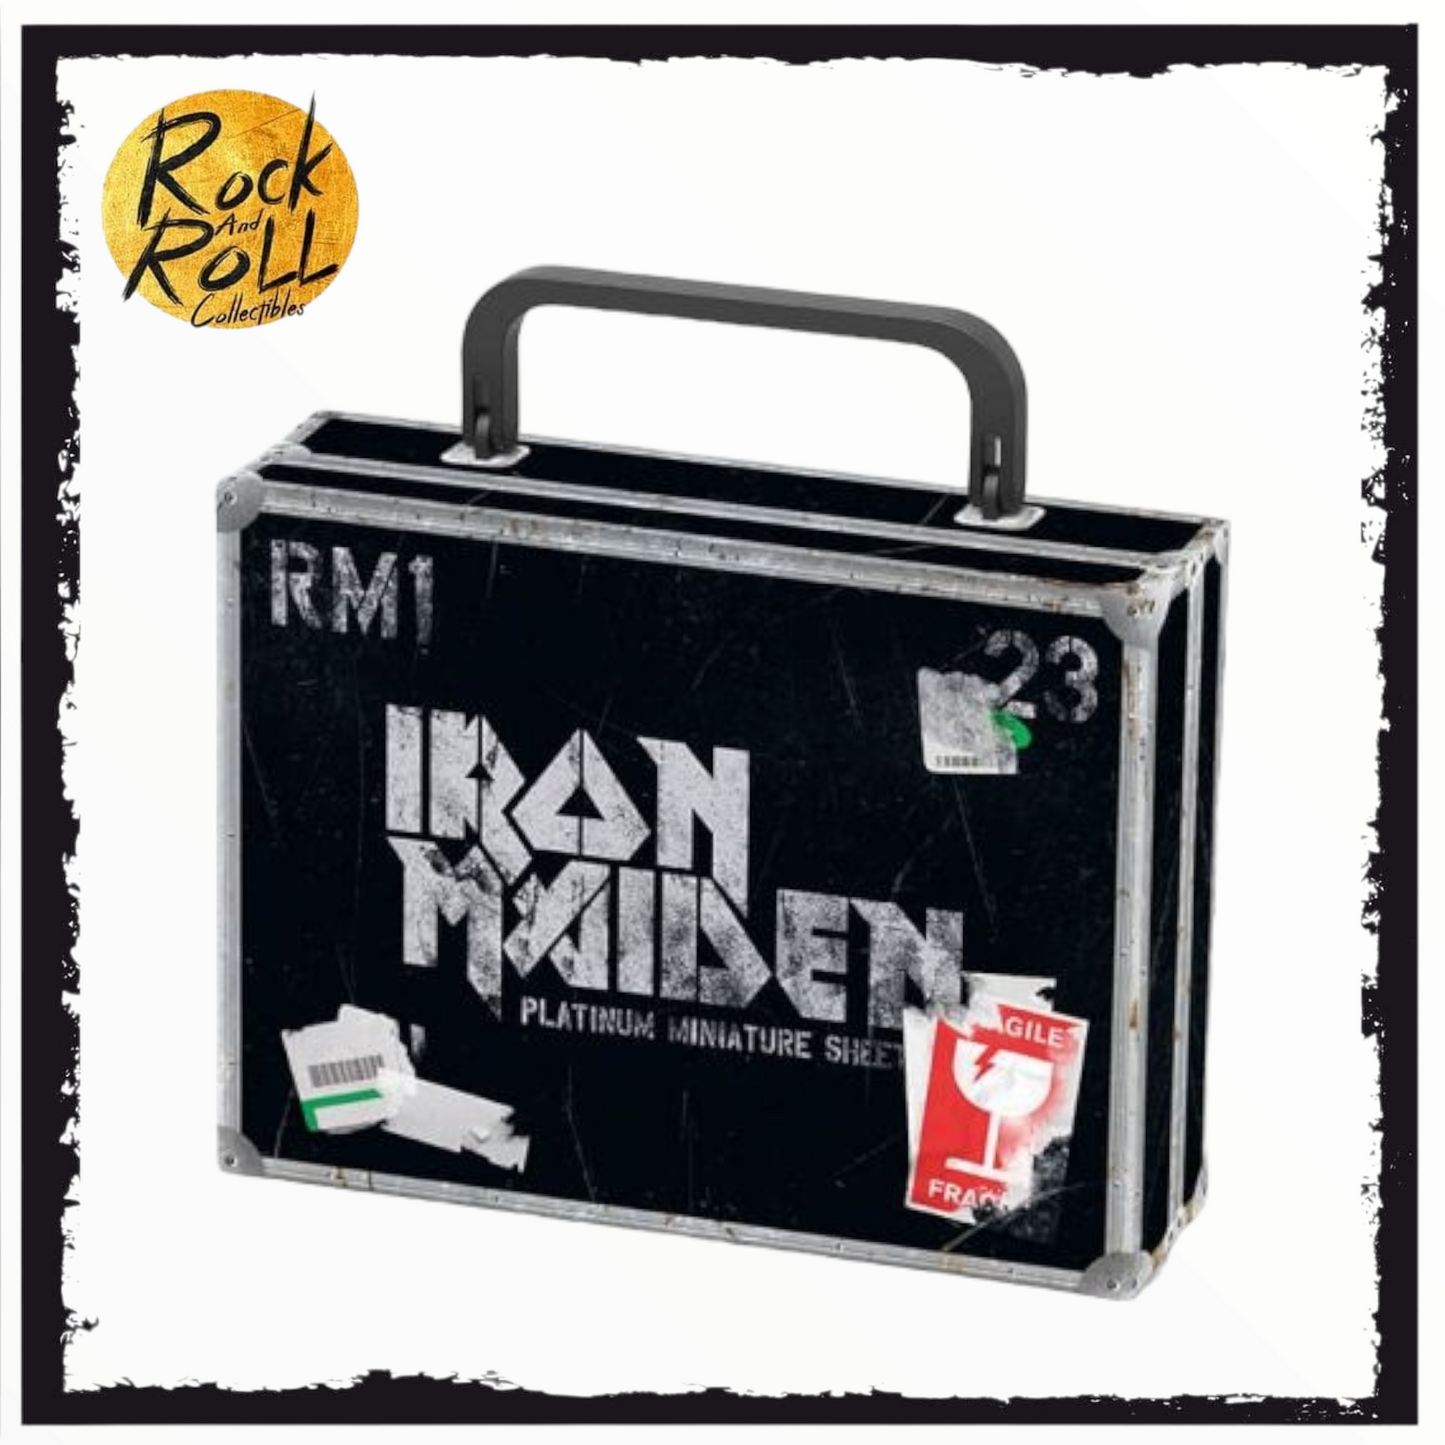 Iron Maiden Limited Edition Platinum Eddie Stamps
- Limited to 666